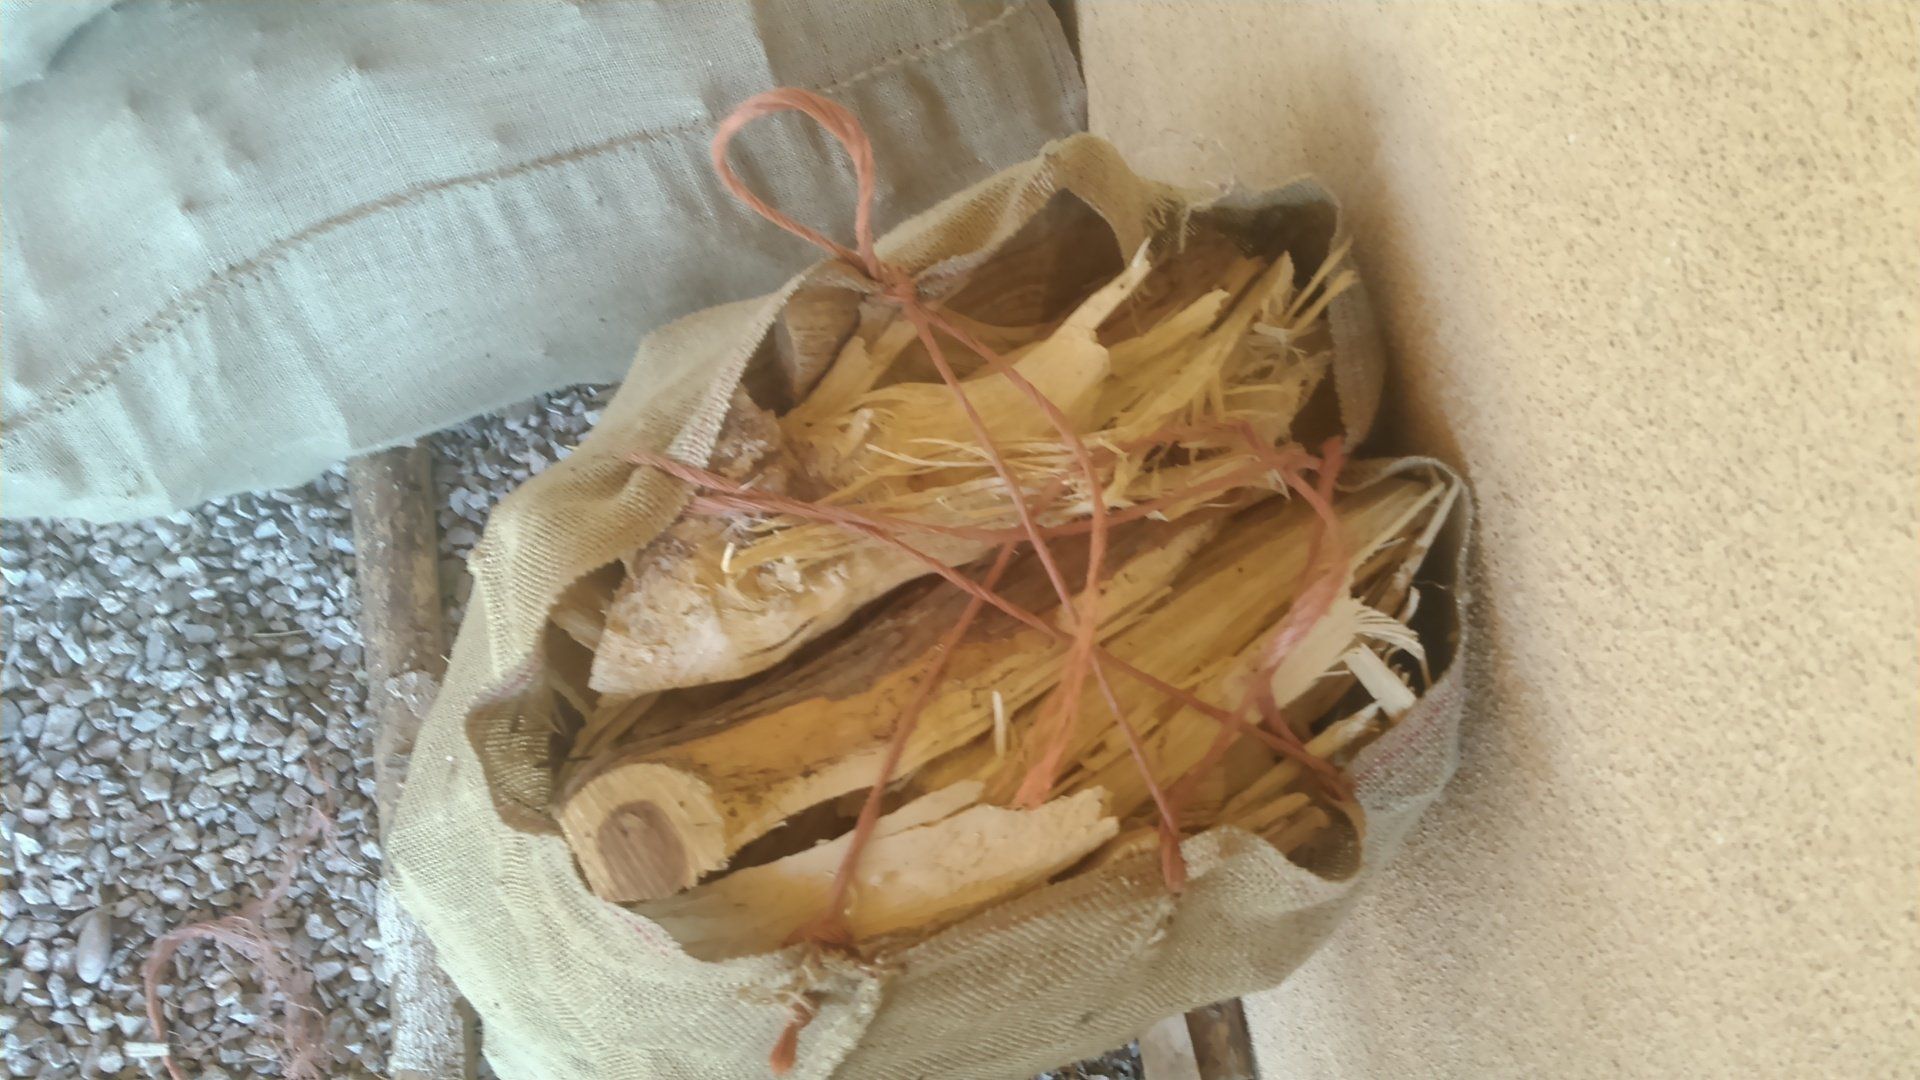 Burlap sac of kindling - Firewood in Santa Fe, NM